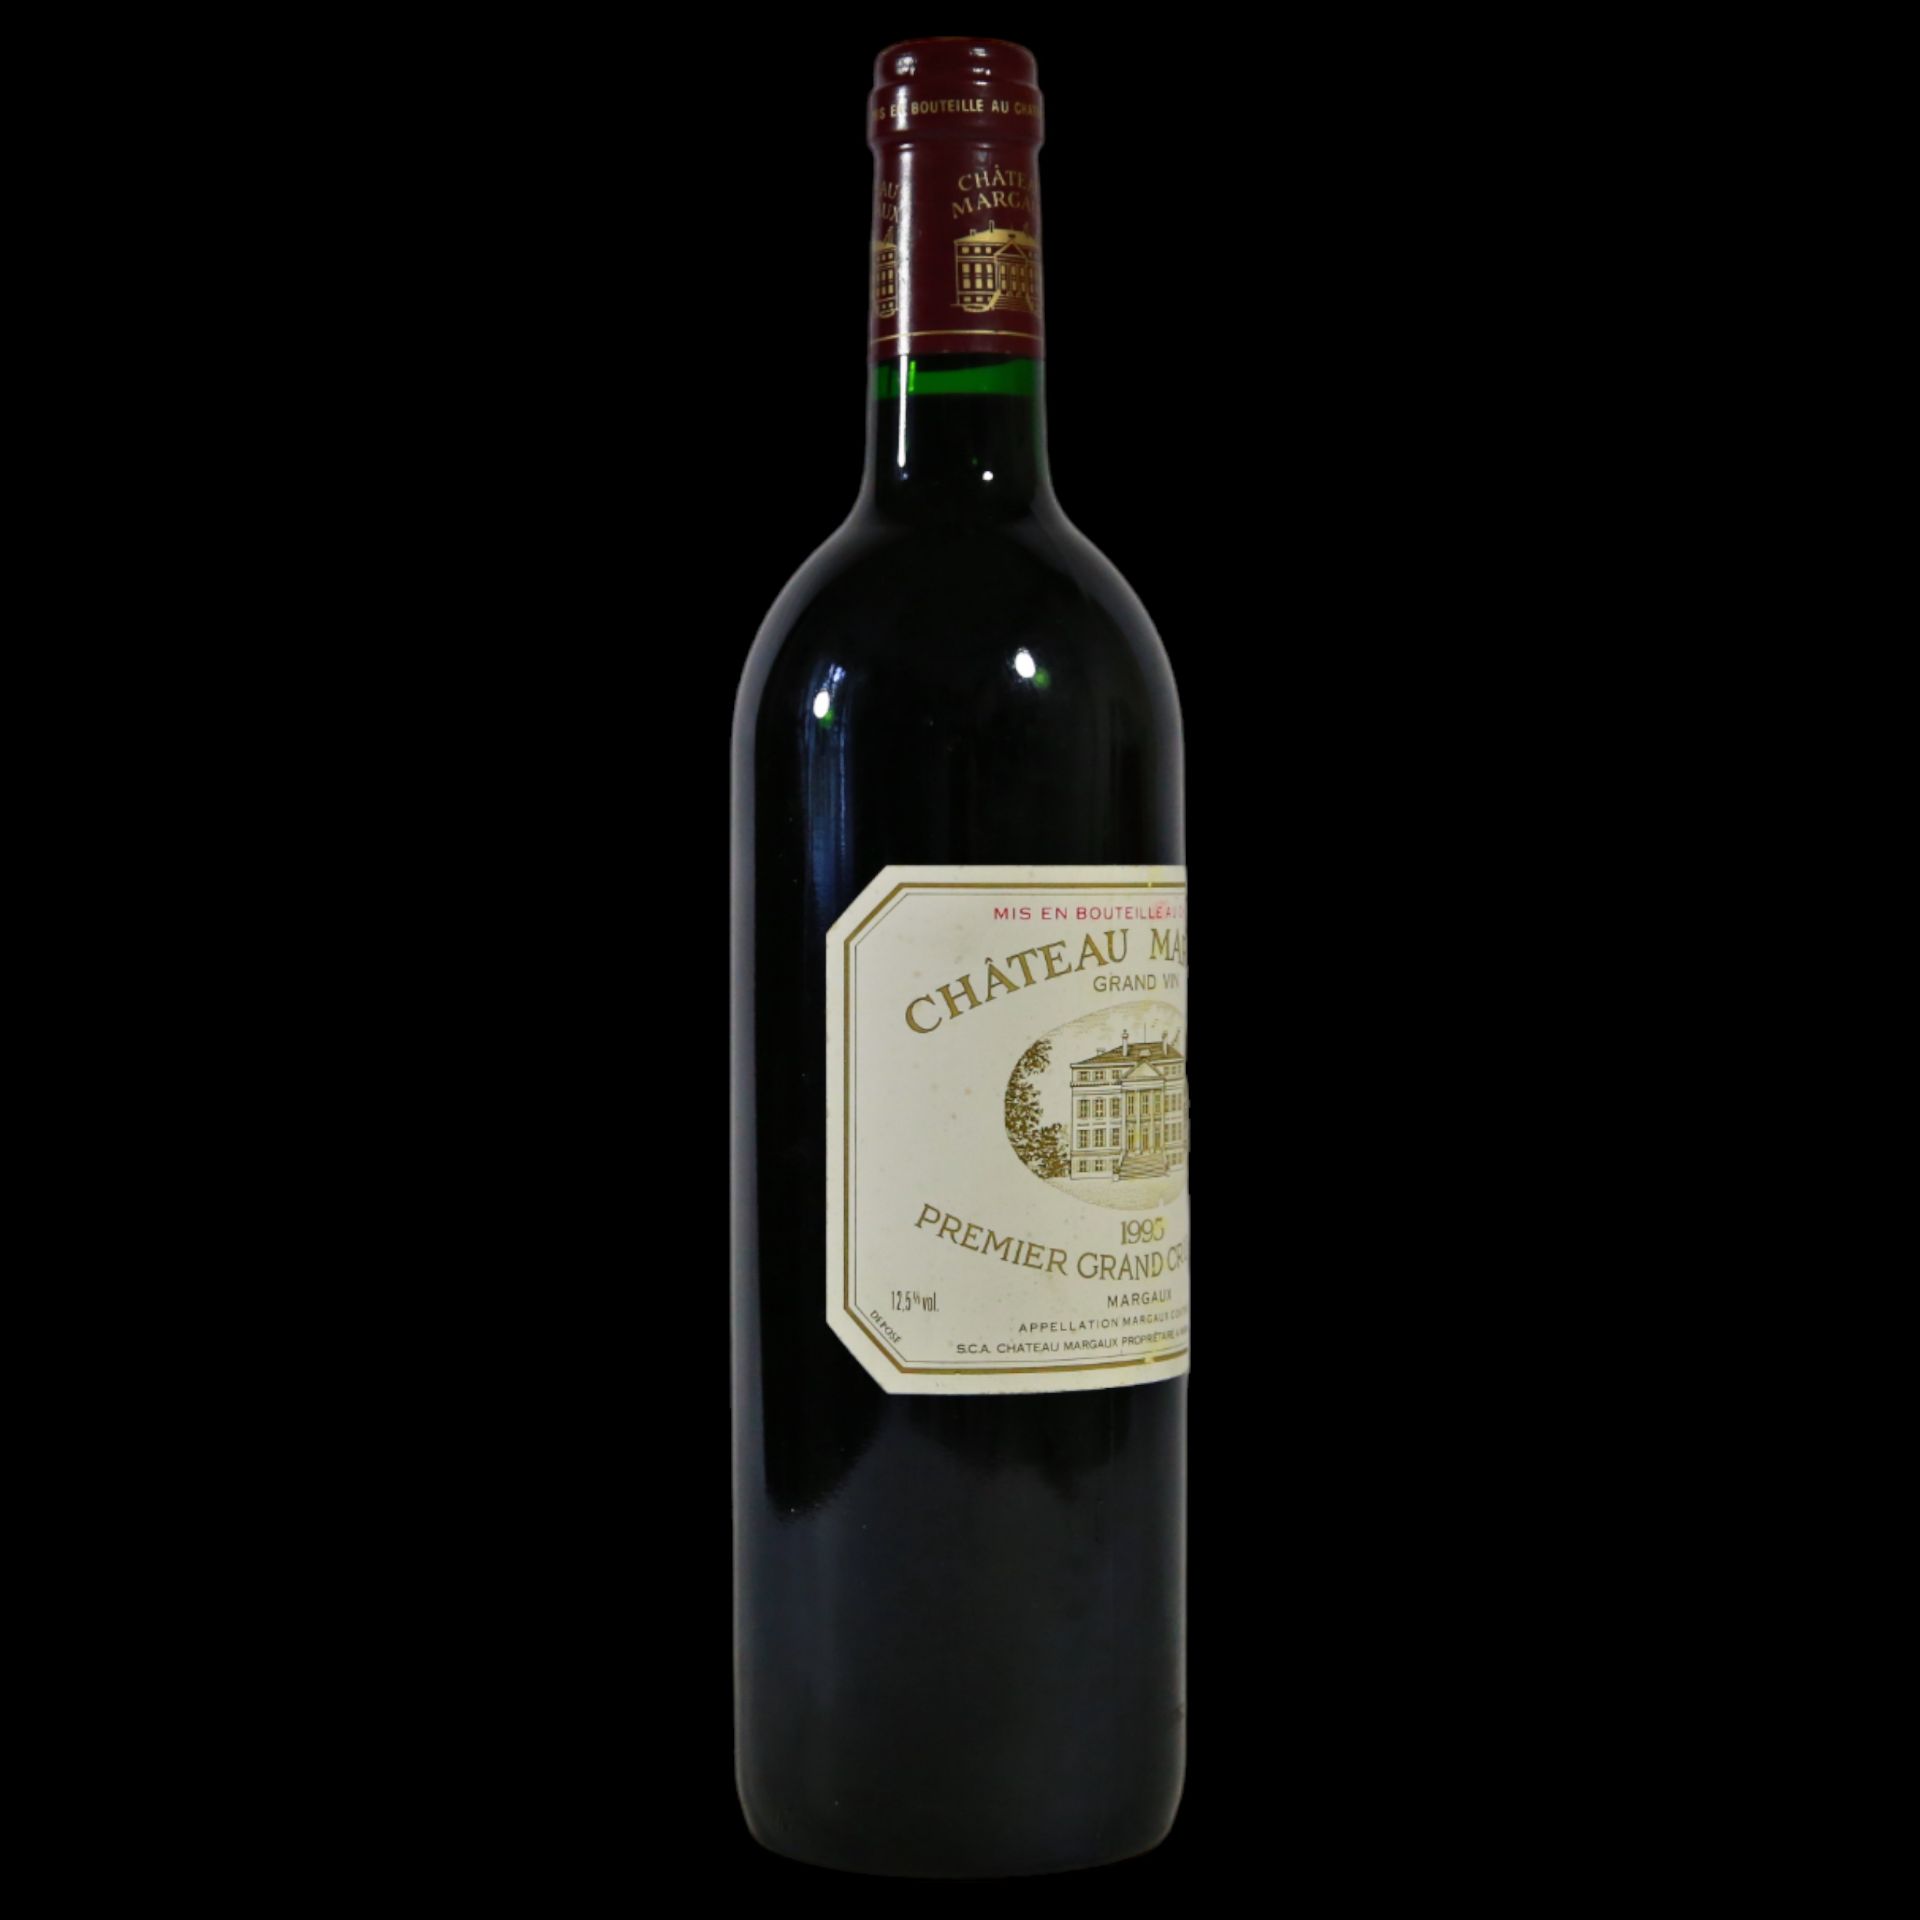 Bottle Vintage Chateau Margaux 1995, Premier Cru Classe. - Image 9 of 12